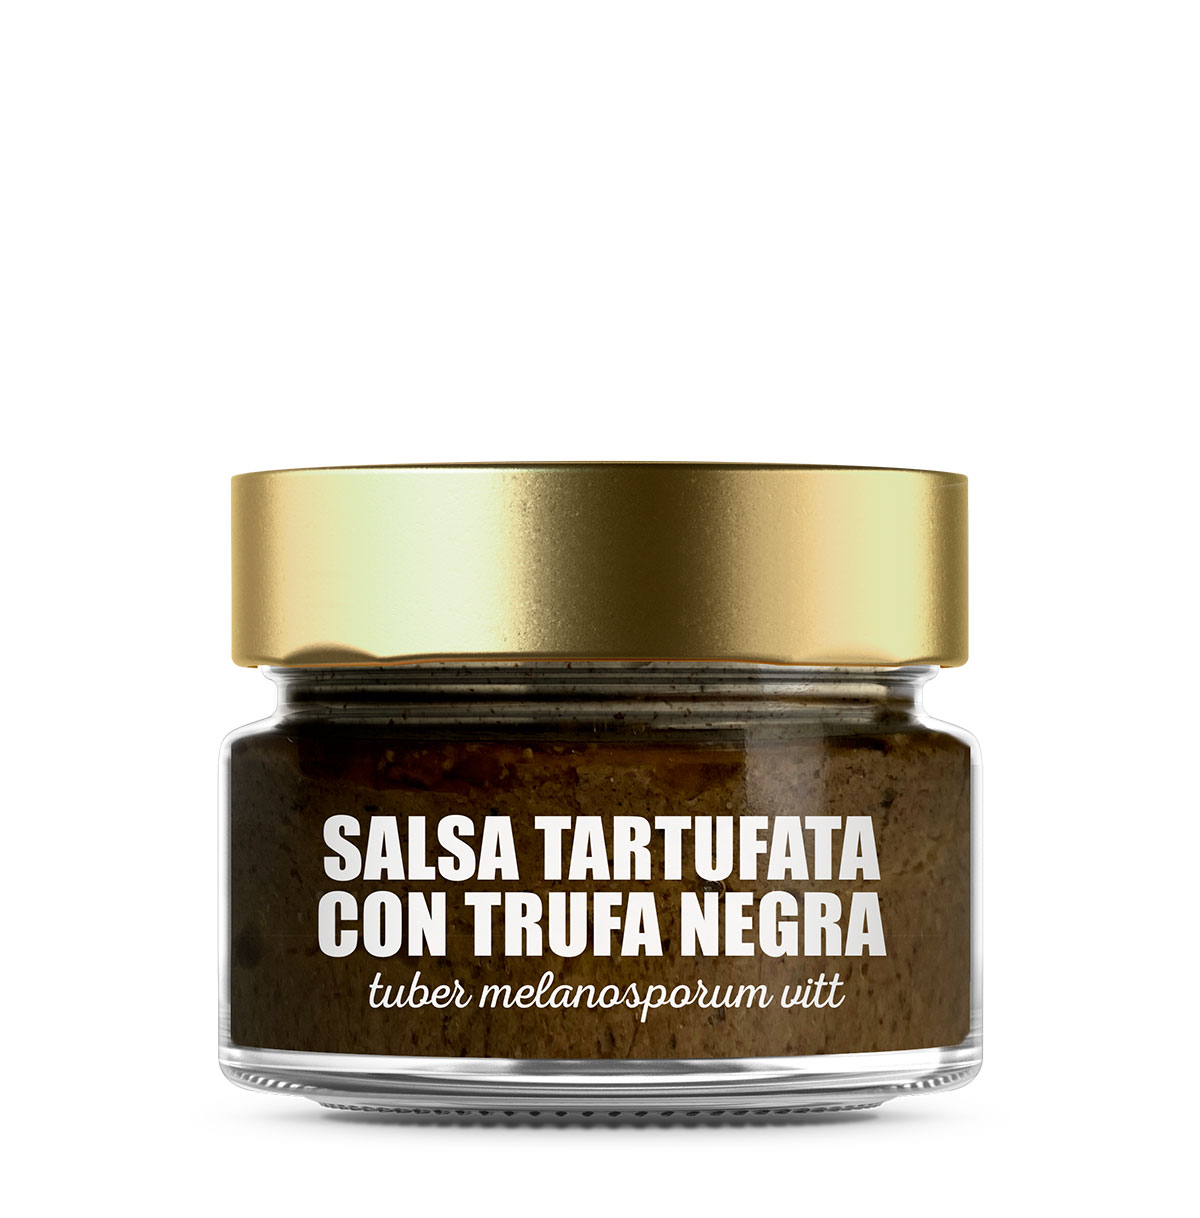 Salsa tartufata con tartufo nero tuber melanosporum vitt